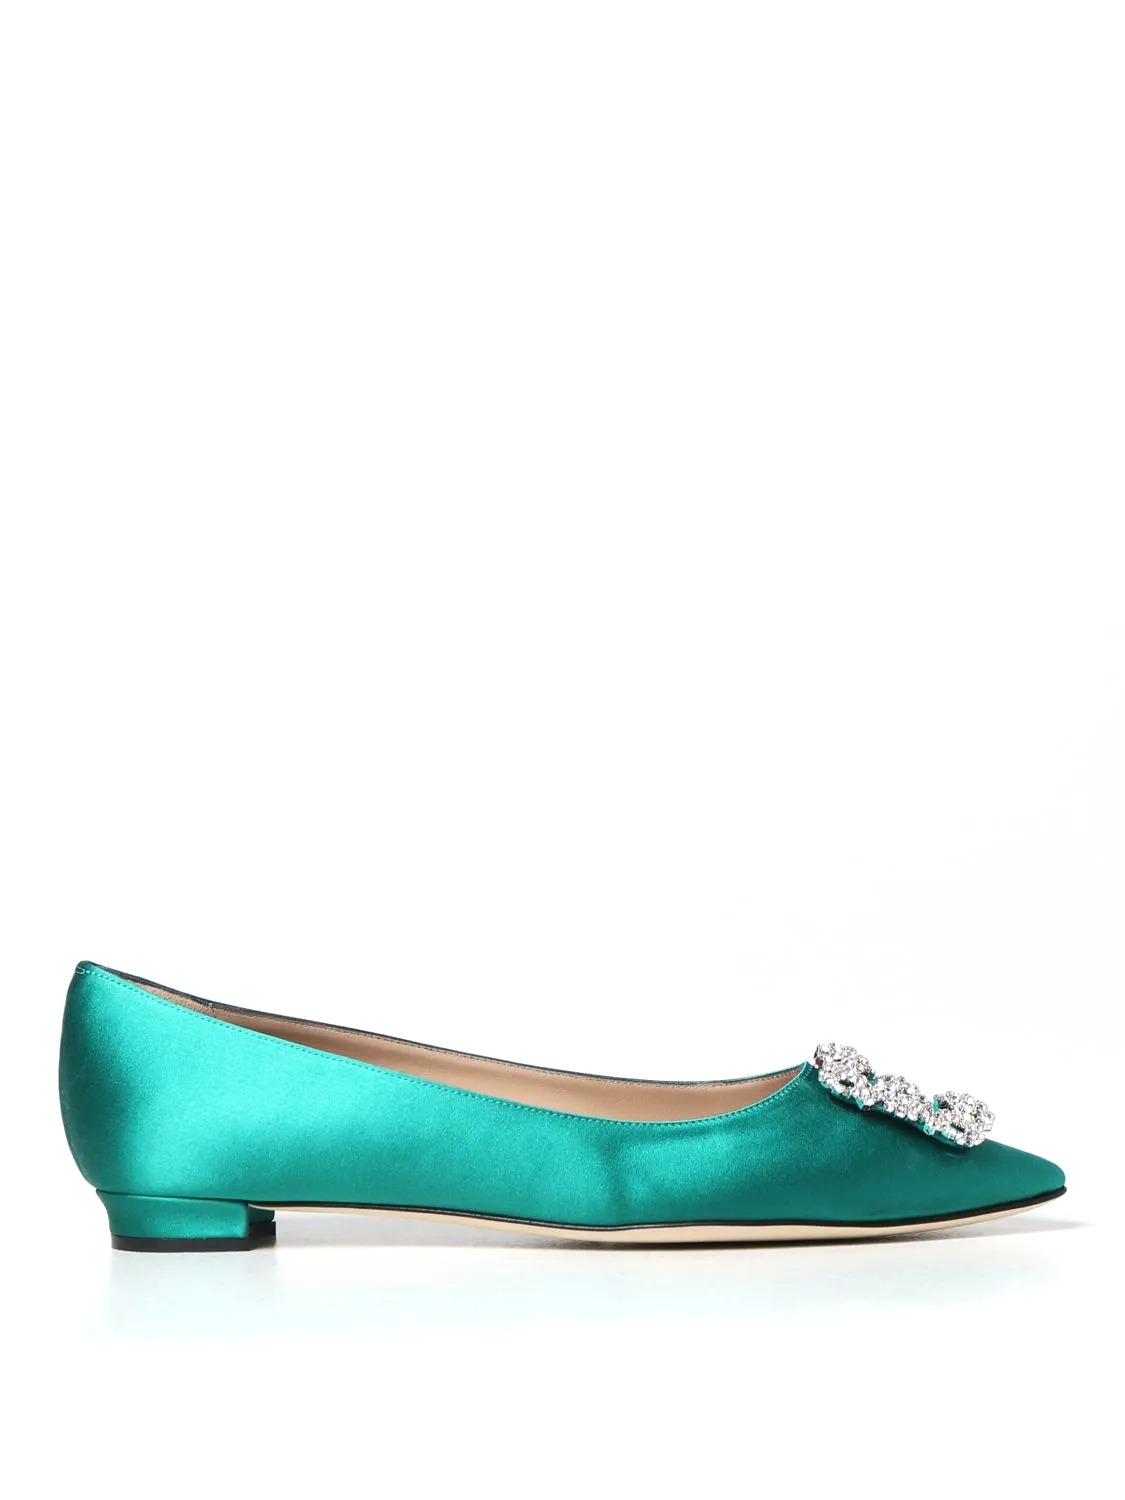 GIÀY MANOLO BLAHNIK Emerald ballet shoes